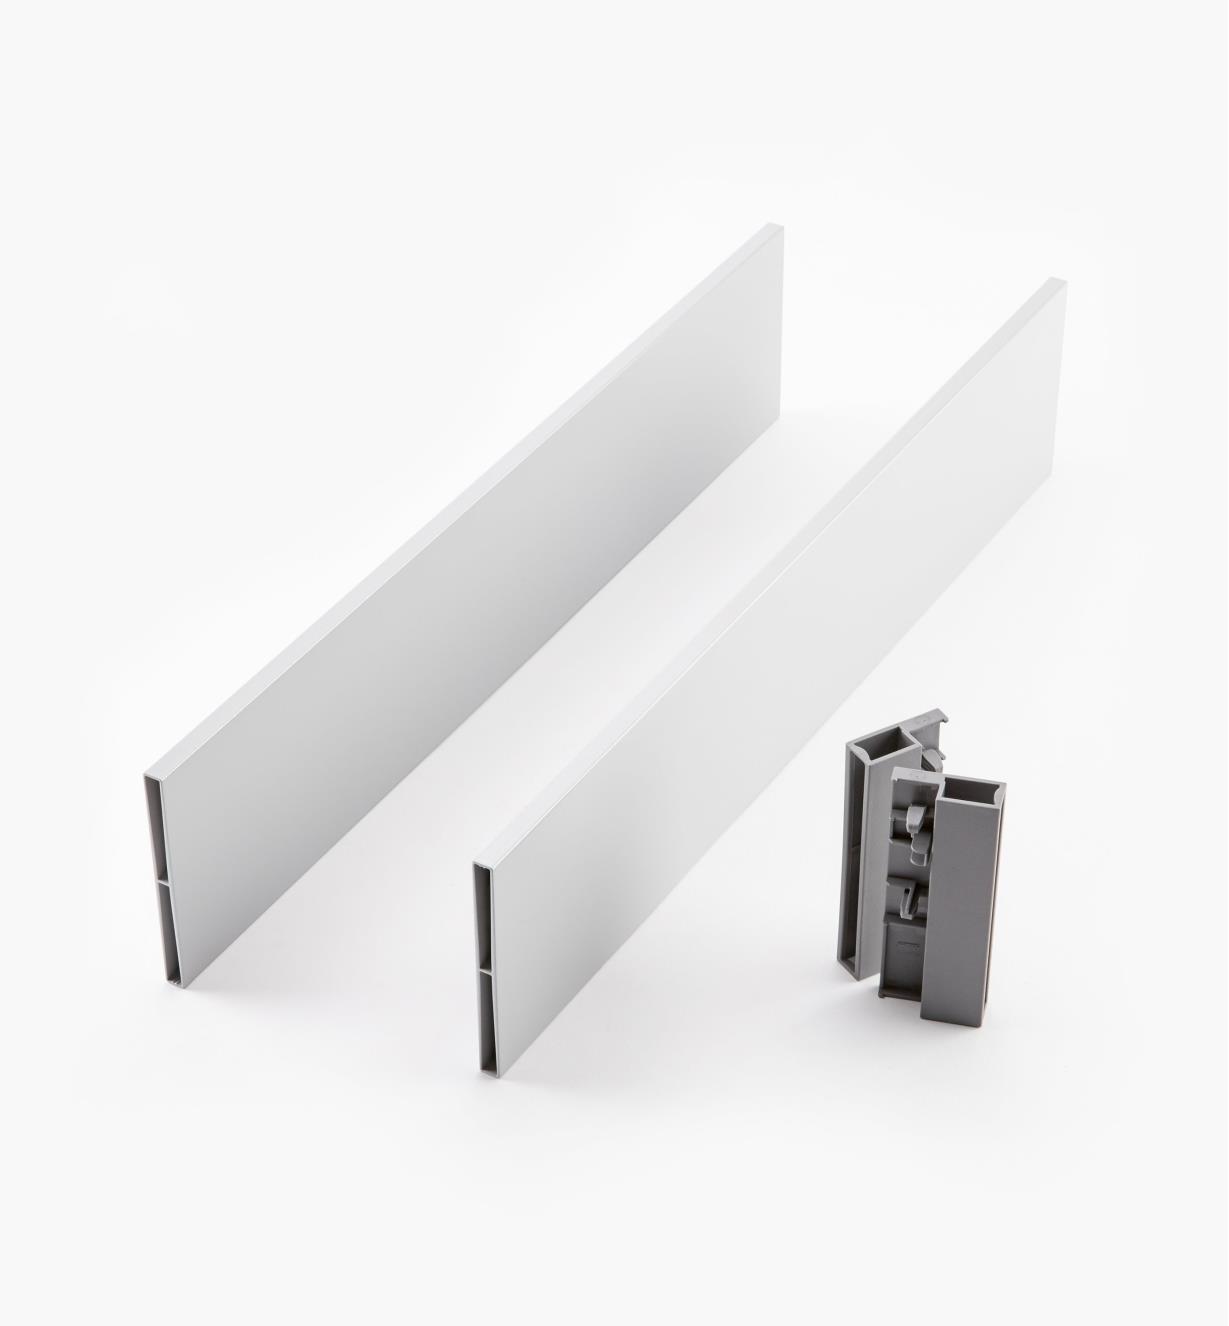 02K2847 - Steel Insert Panels for Blum Tandembox Antaro Soft-Close Type D 450mm Drawer Kit